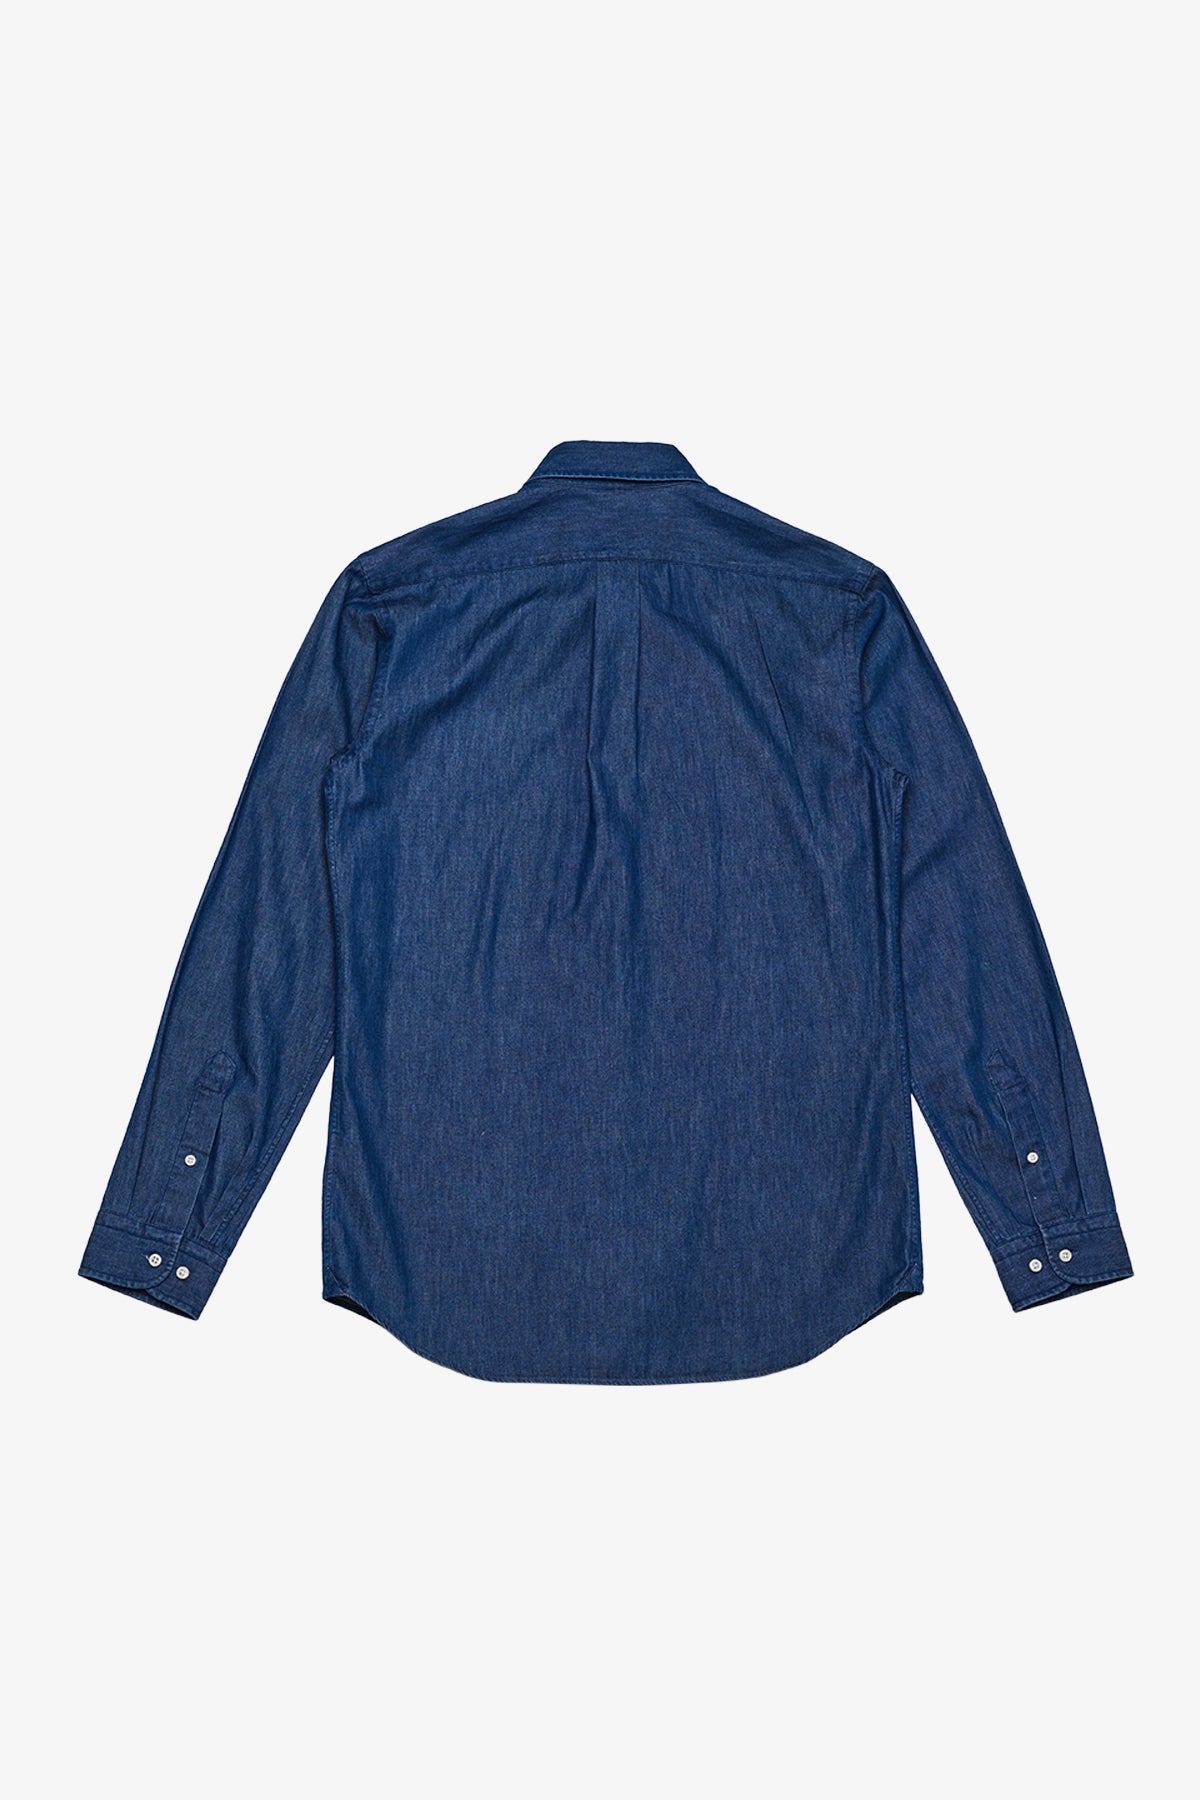 Crispin - Dark Blue Casual Shirt